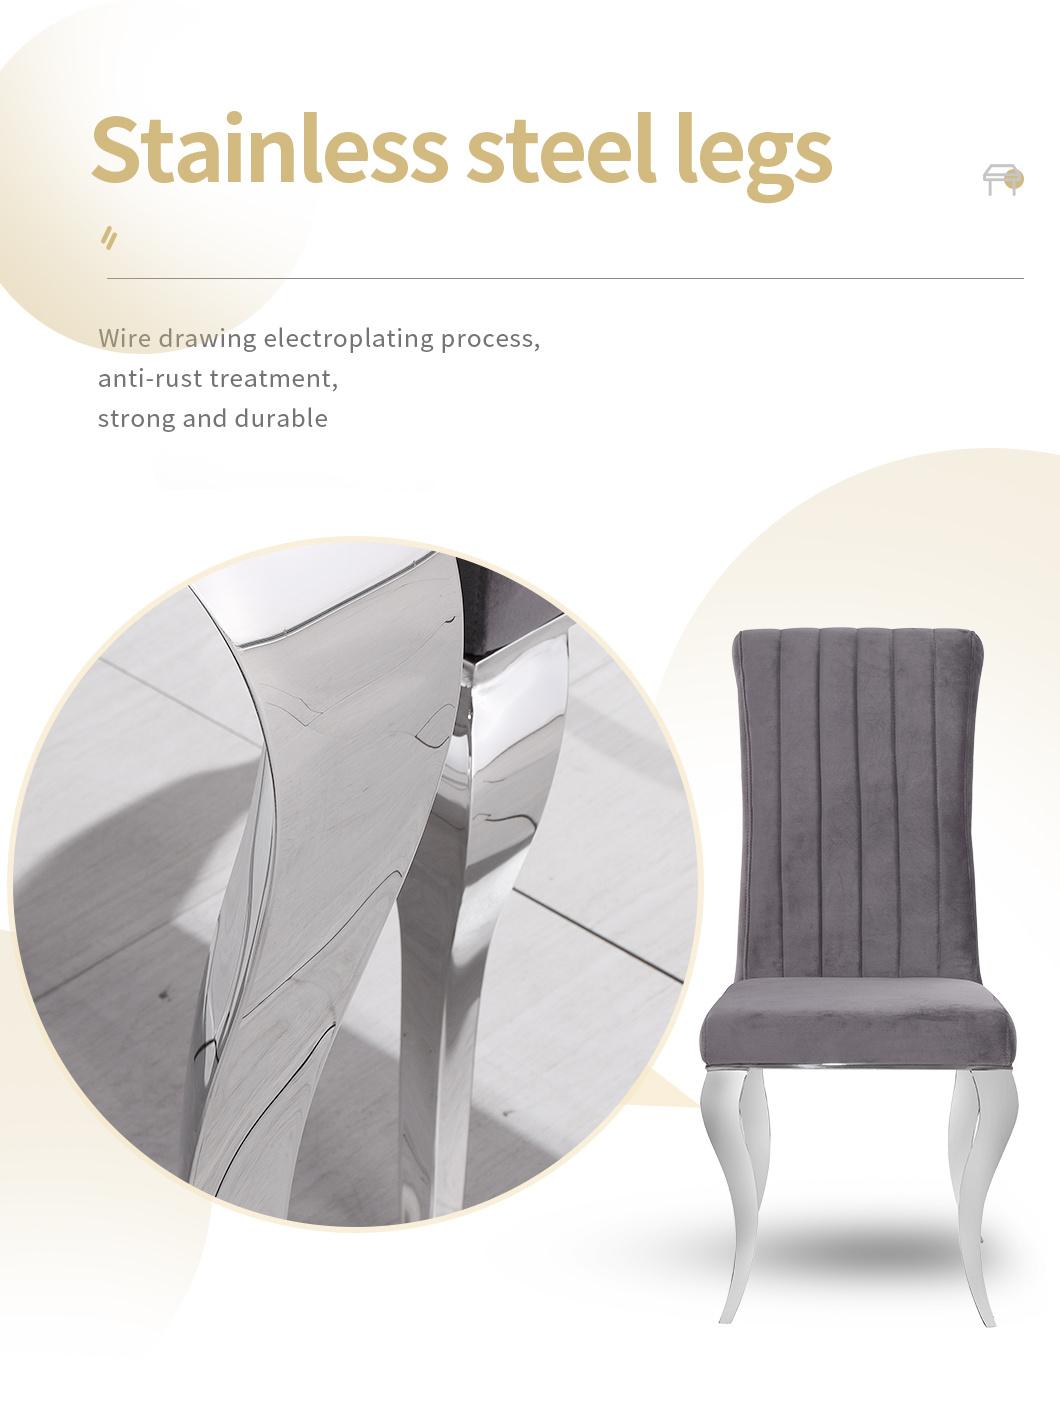 30 Days Diron Carton Box Customized China Chair Home Furniture